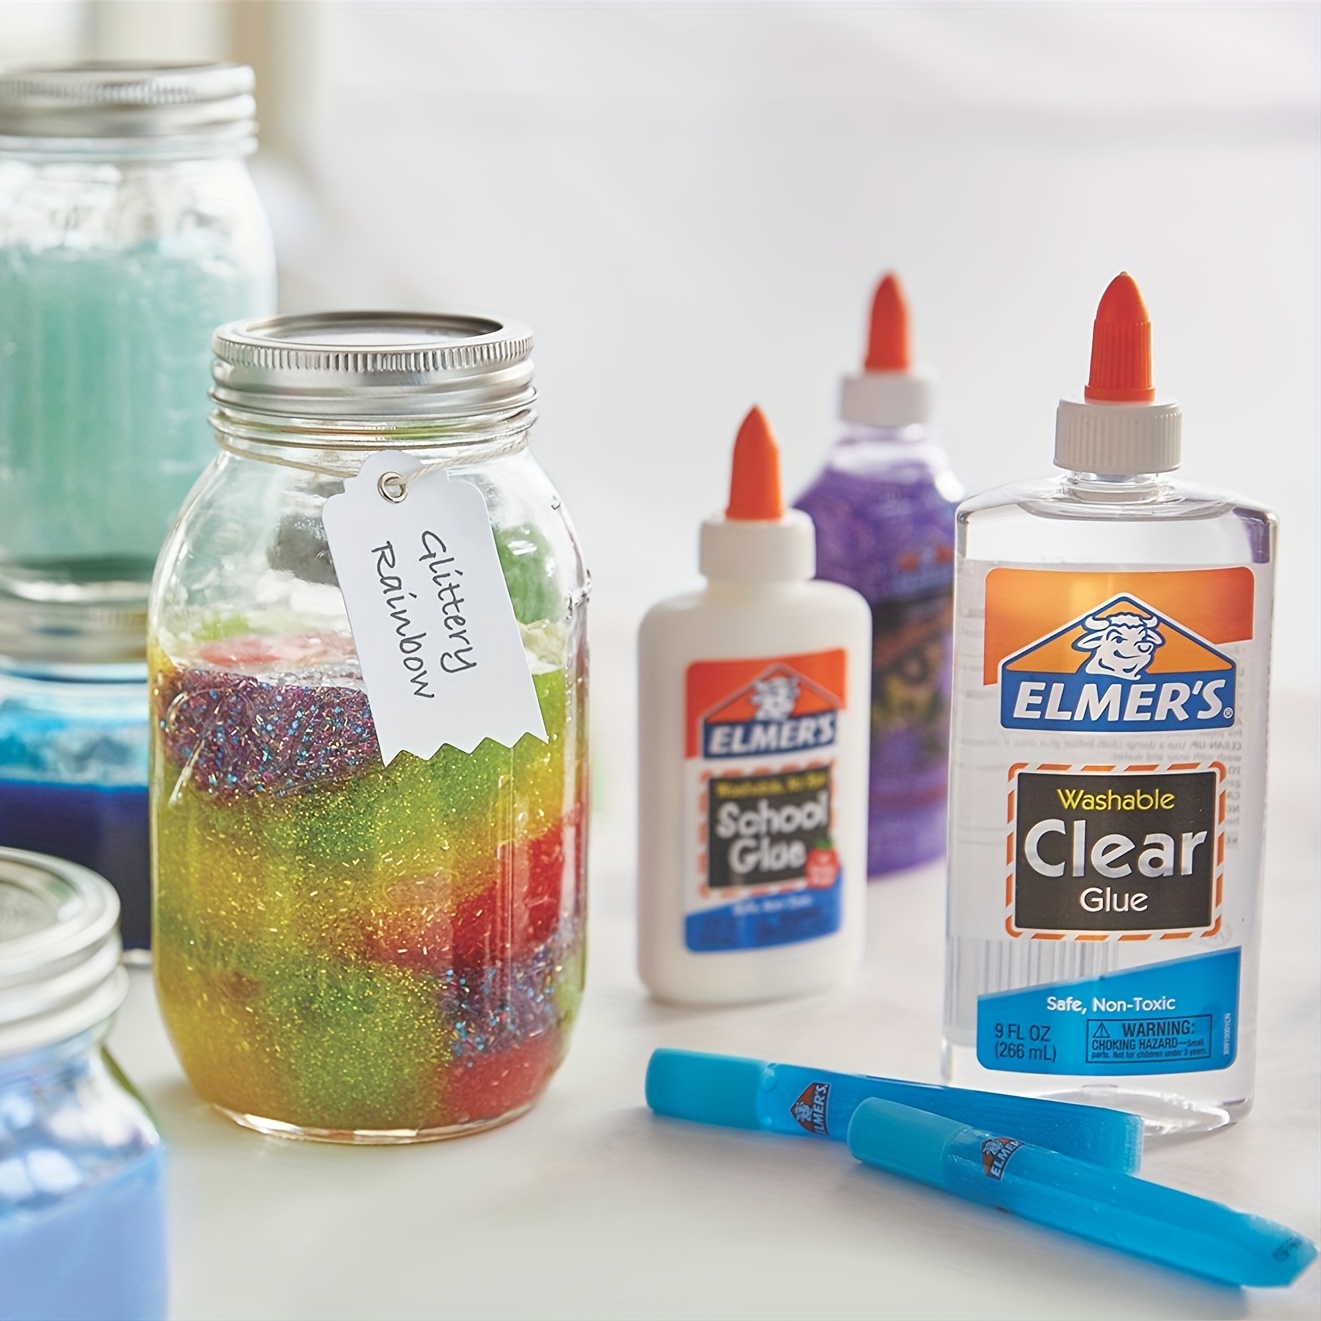 Elmers Elmer's Liquid School Glue White Washable Glue Clear Glue